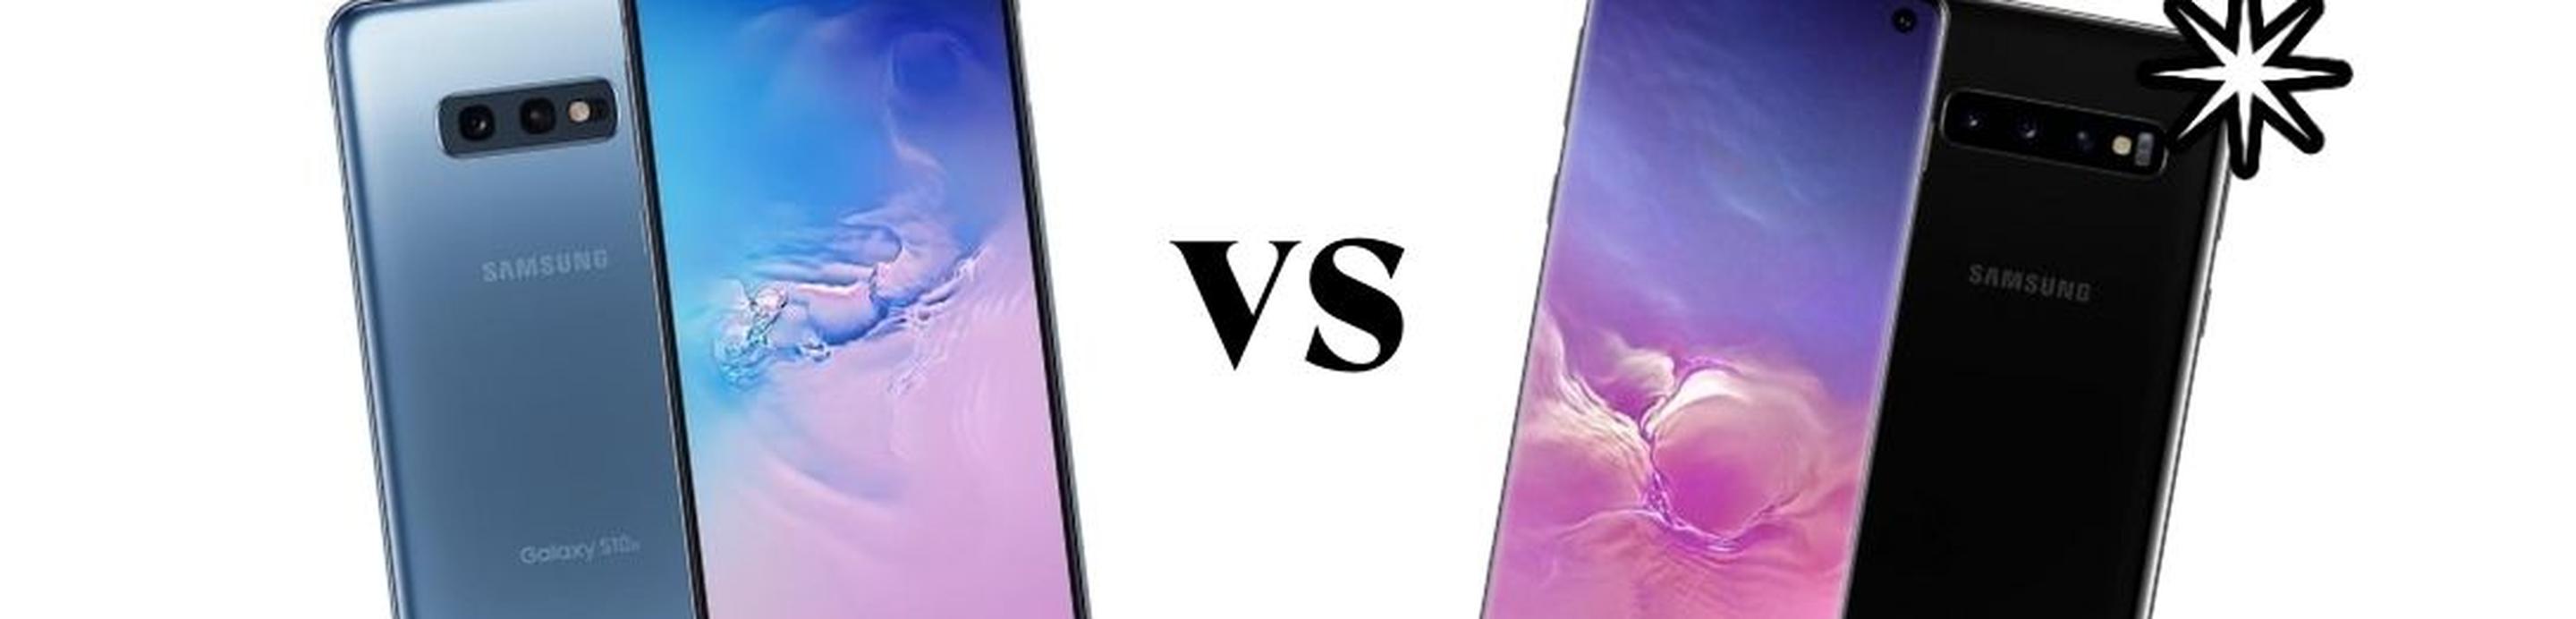 Samsung Galaxy s10 vs. Samsung Galaxy s10e